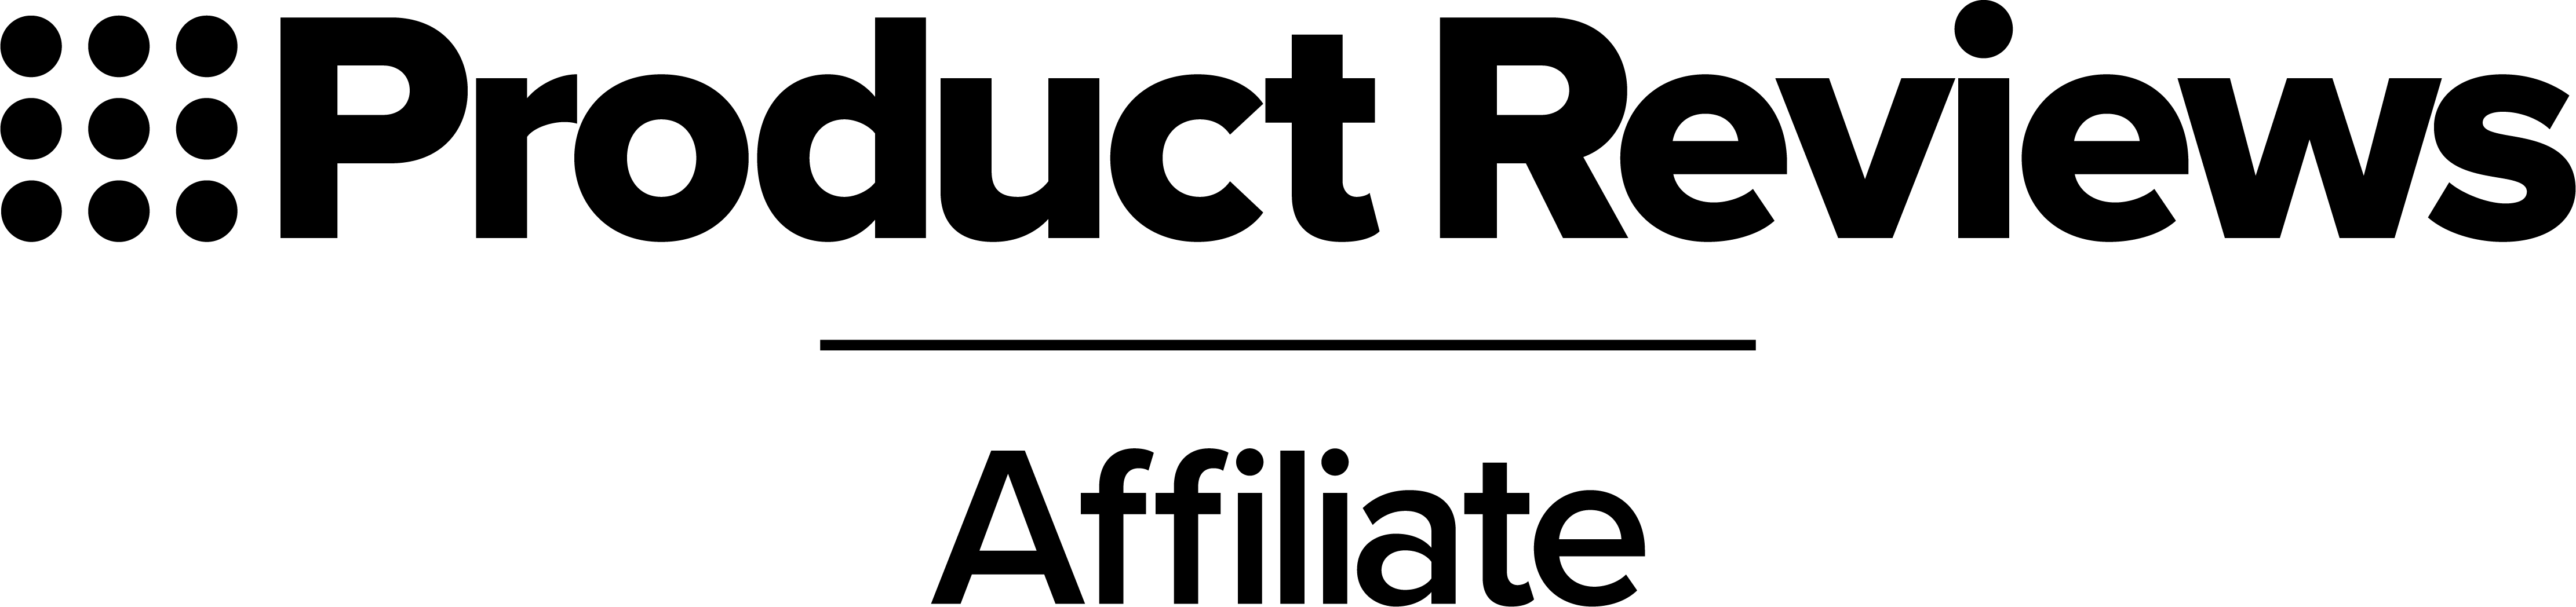 ProductReviews-Affiliate-Logo-RGB-B